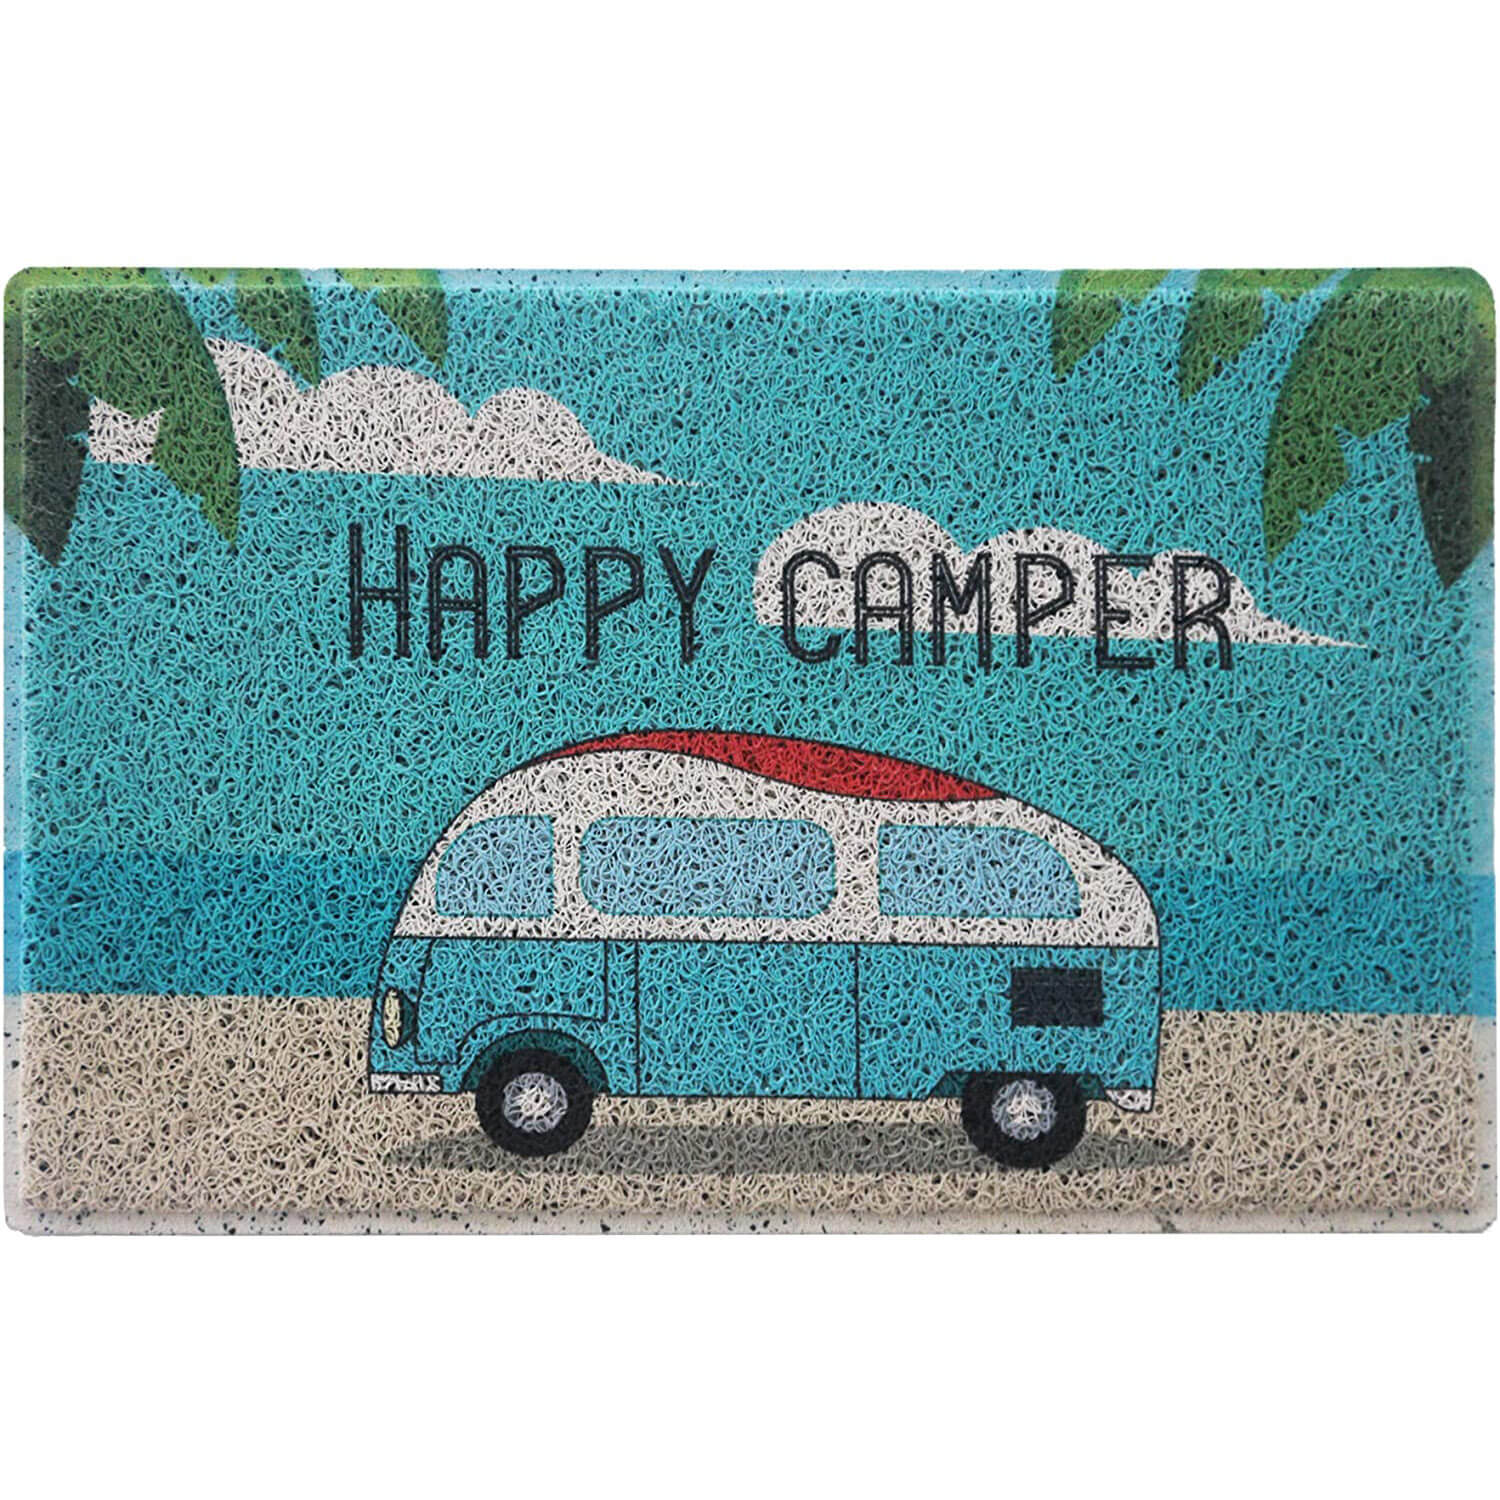 Happy Campers Doormat Mat Anti-Slip Adventure Camping Van Life Entrance  Kitchen Bath Bedroom Rug Carpet